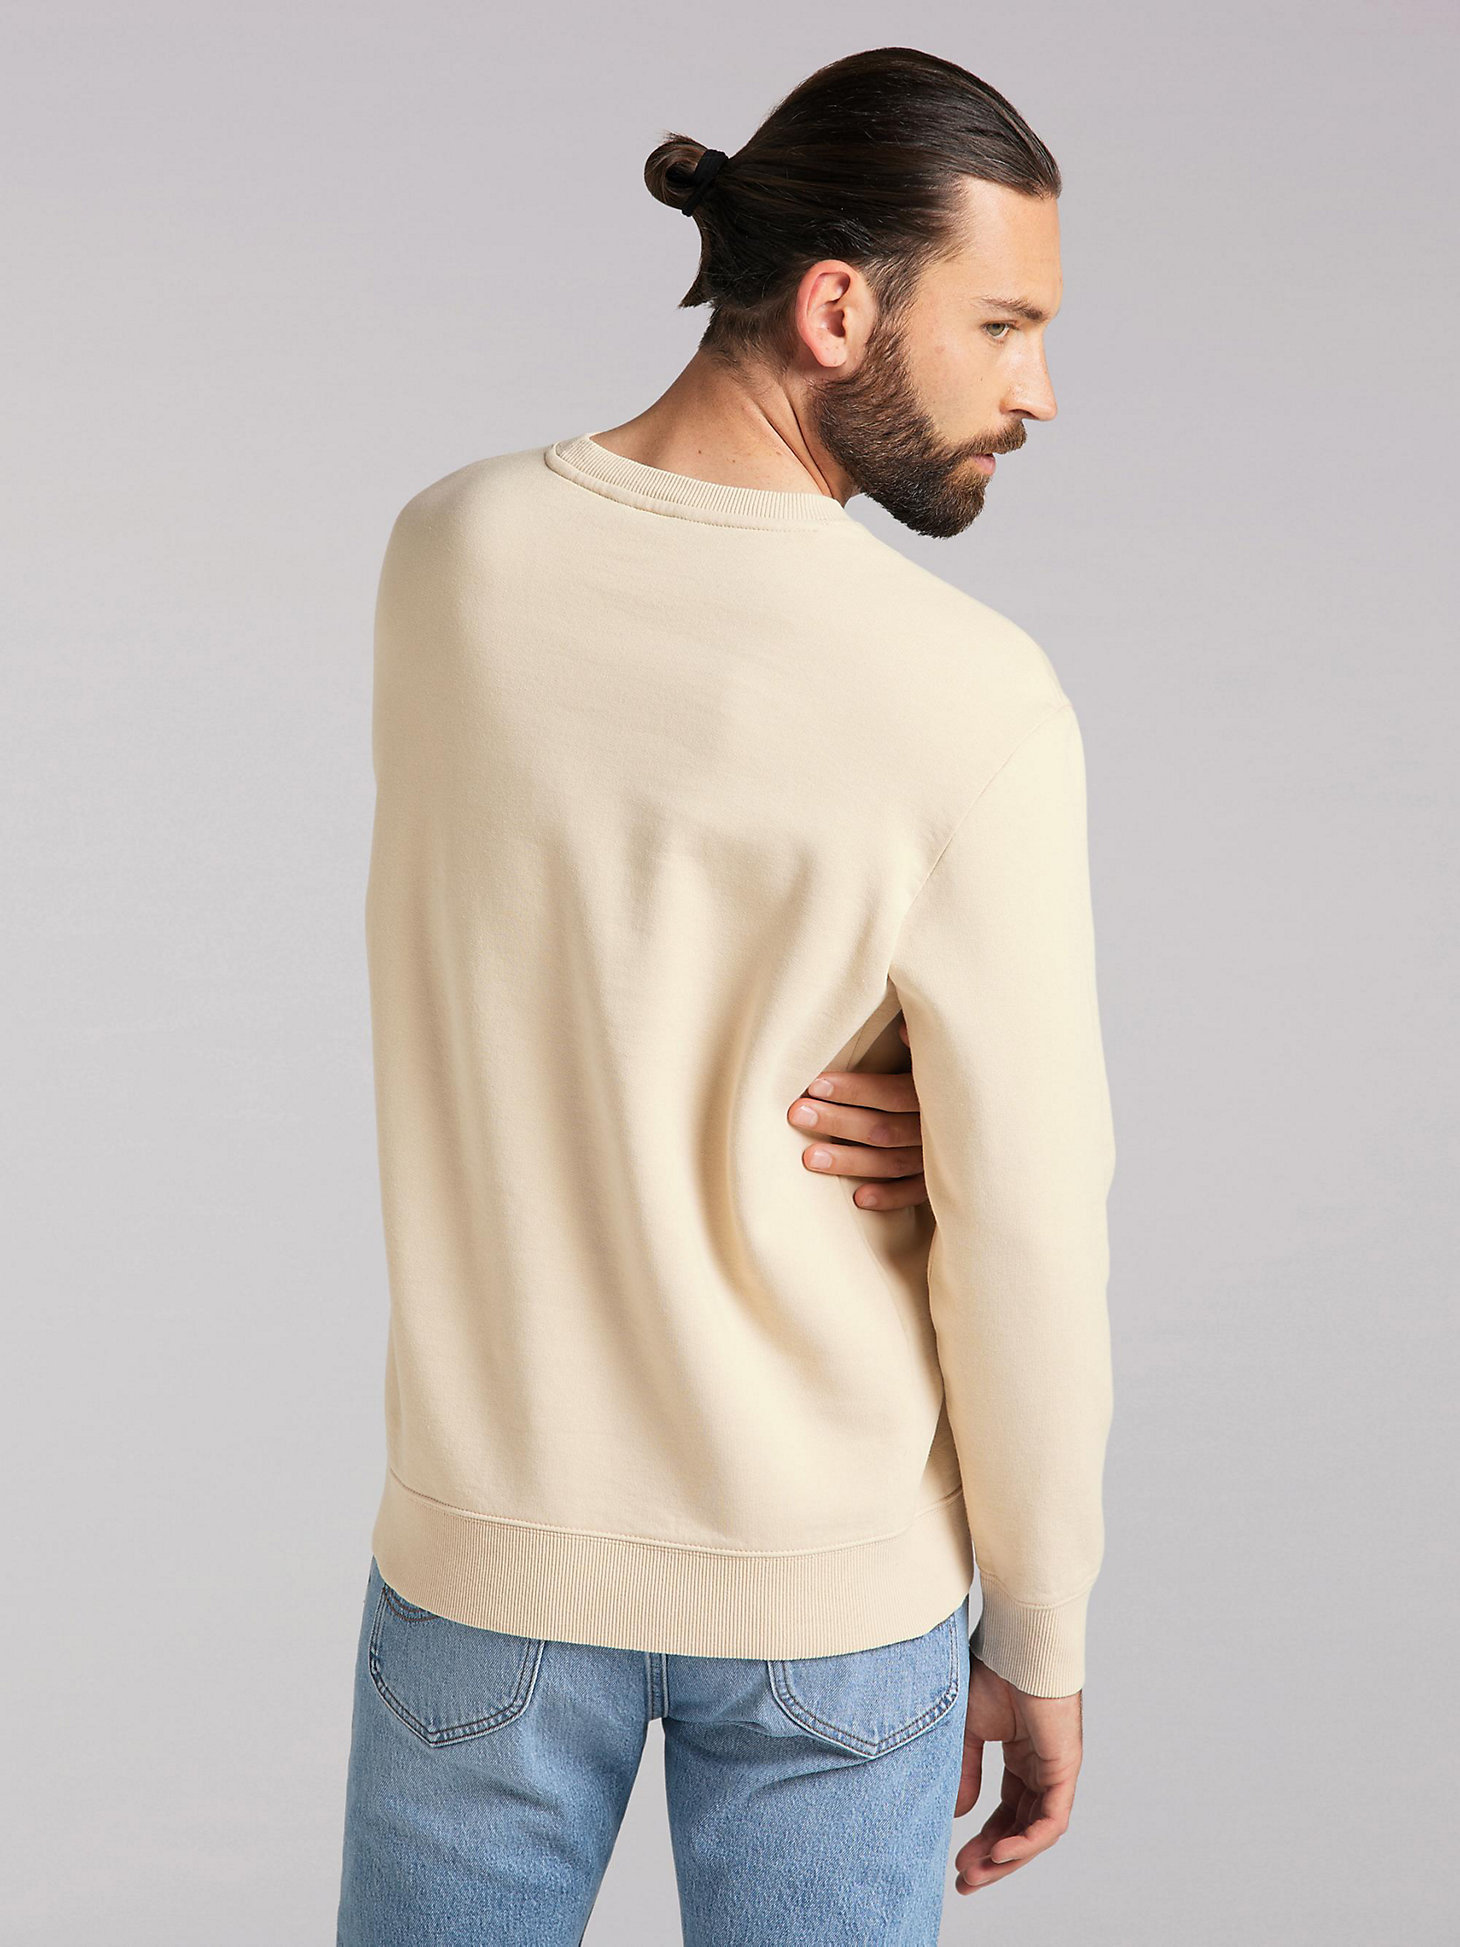 Men's Lee European Collection Can't Bust 'Em Sweatshirt in Beige alternative view 1